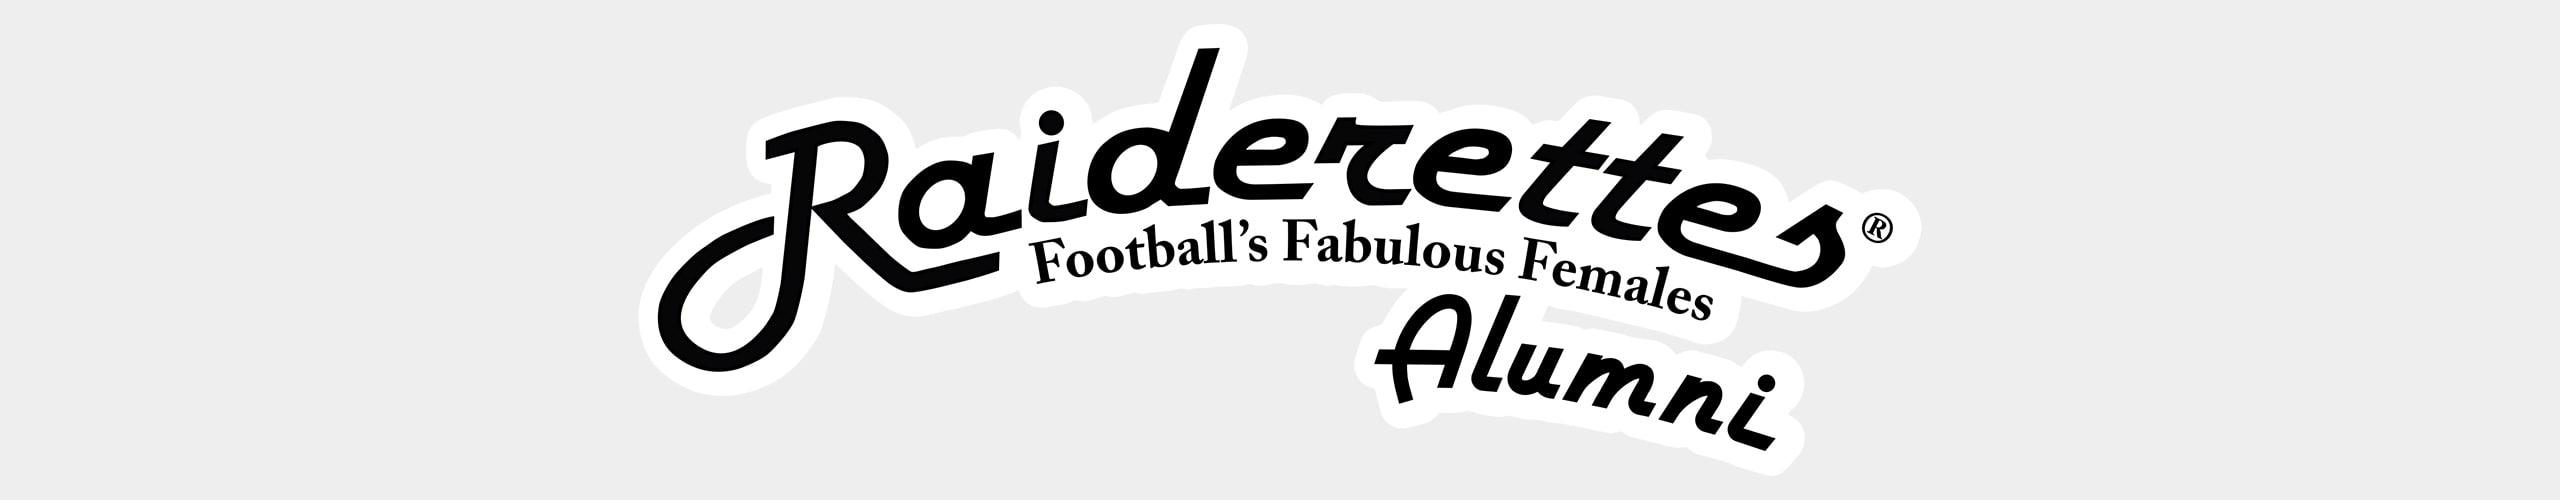 Raiderettes Logo - Raiderettes Alumni | Raiders.com